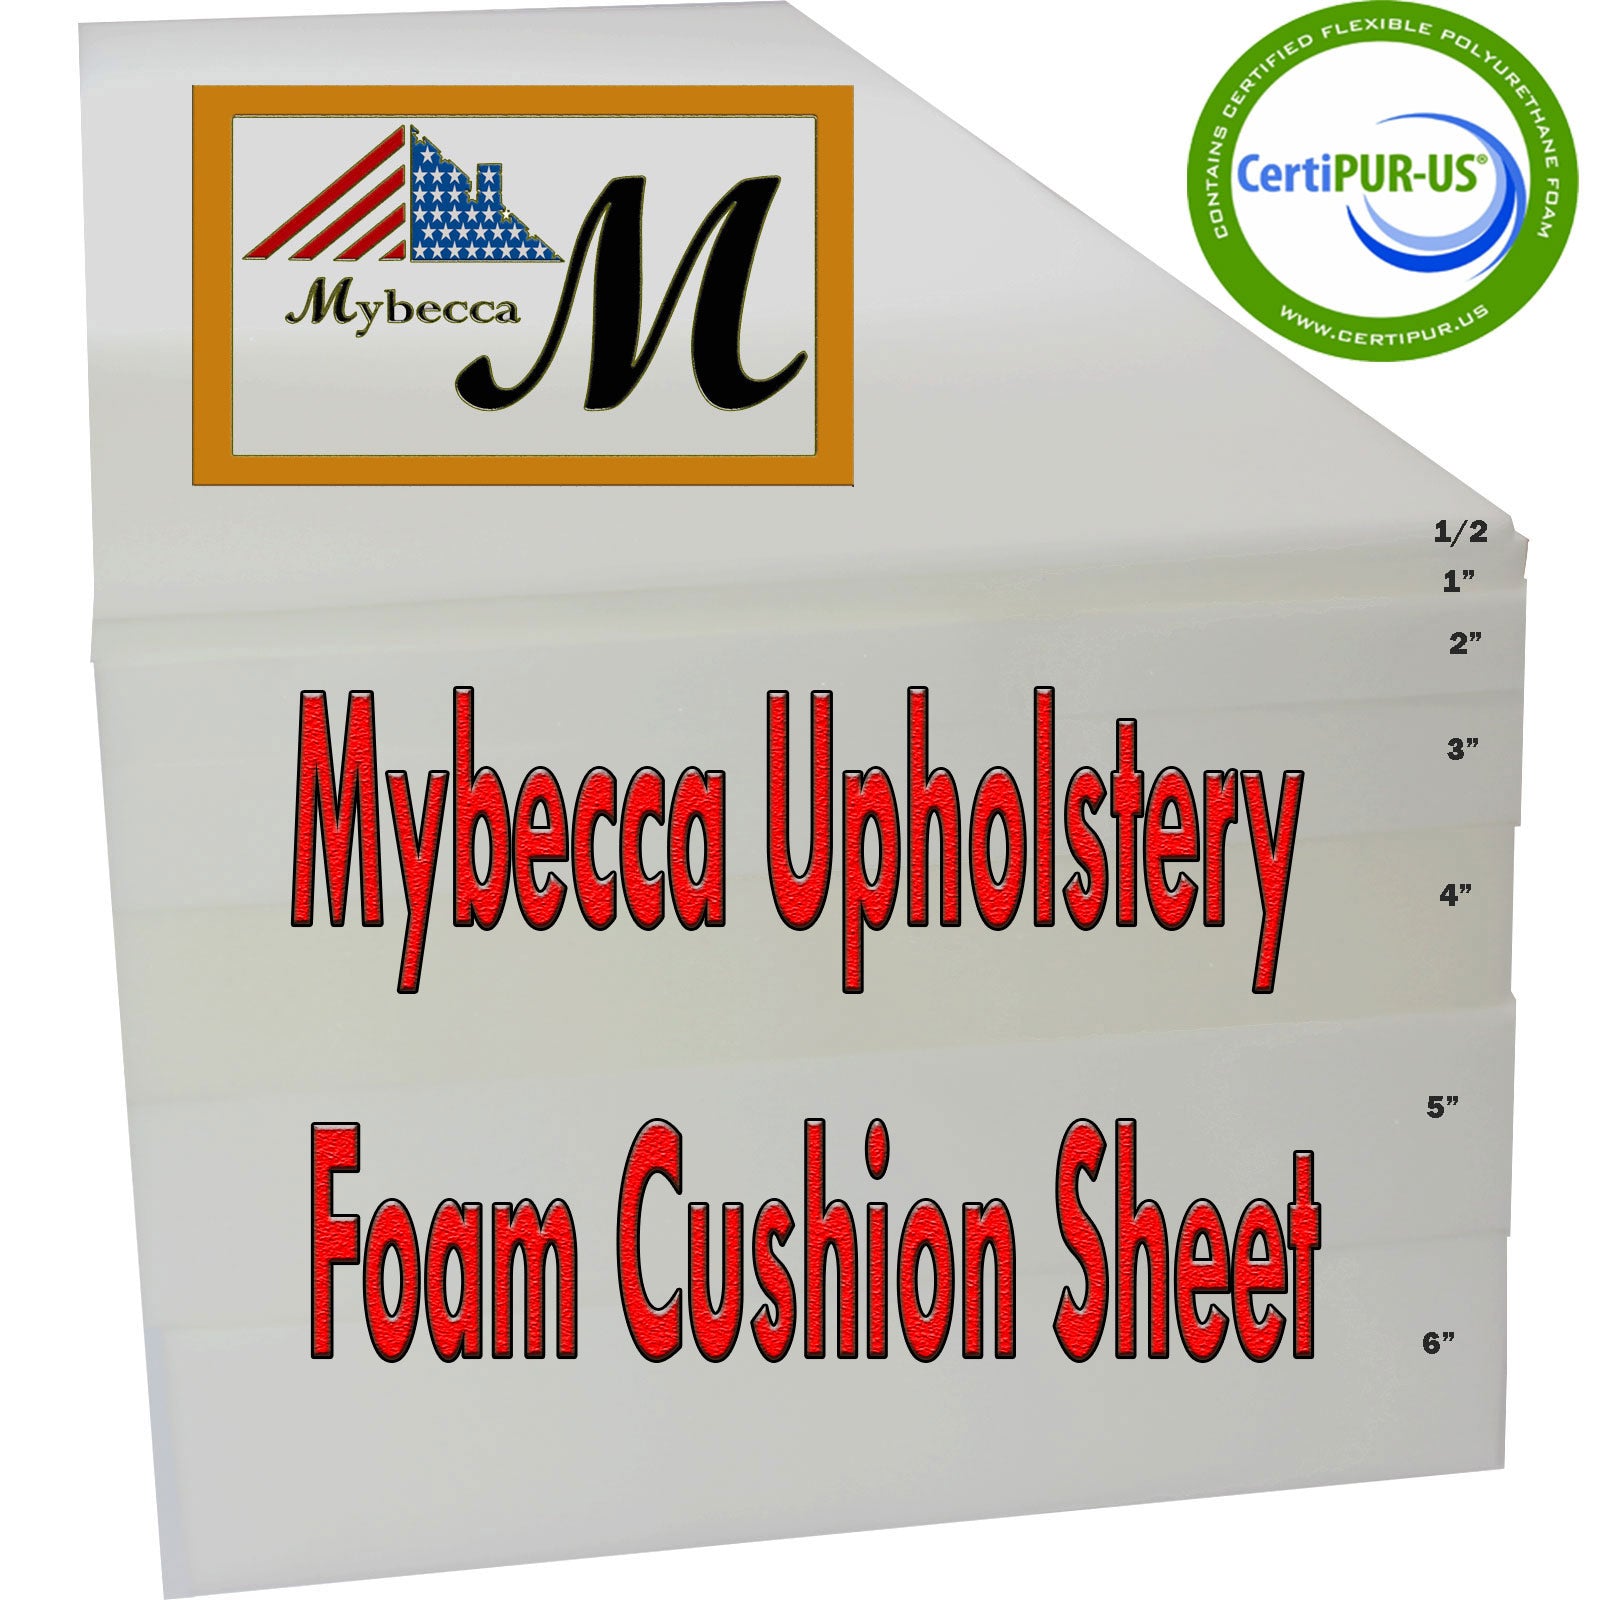 High Density Upholstery Foam Seat Sofa Cushion Replacement Sheets Foam  Padding